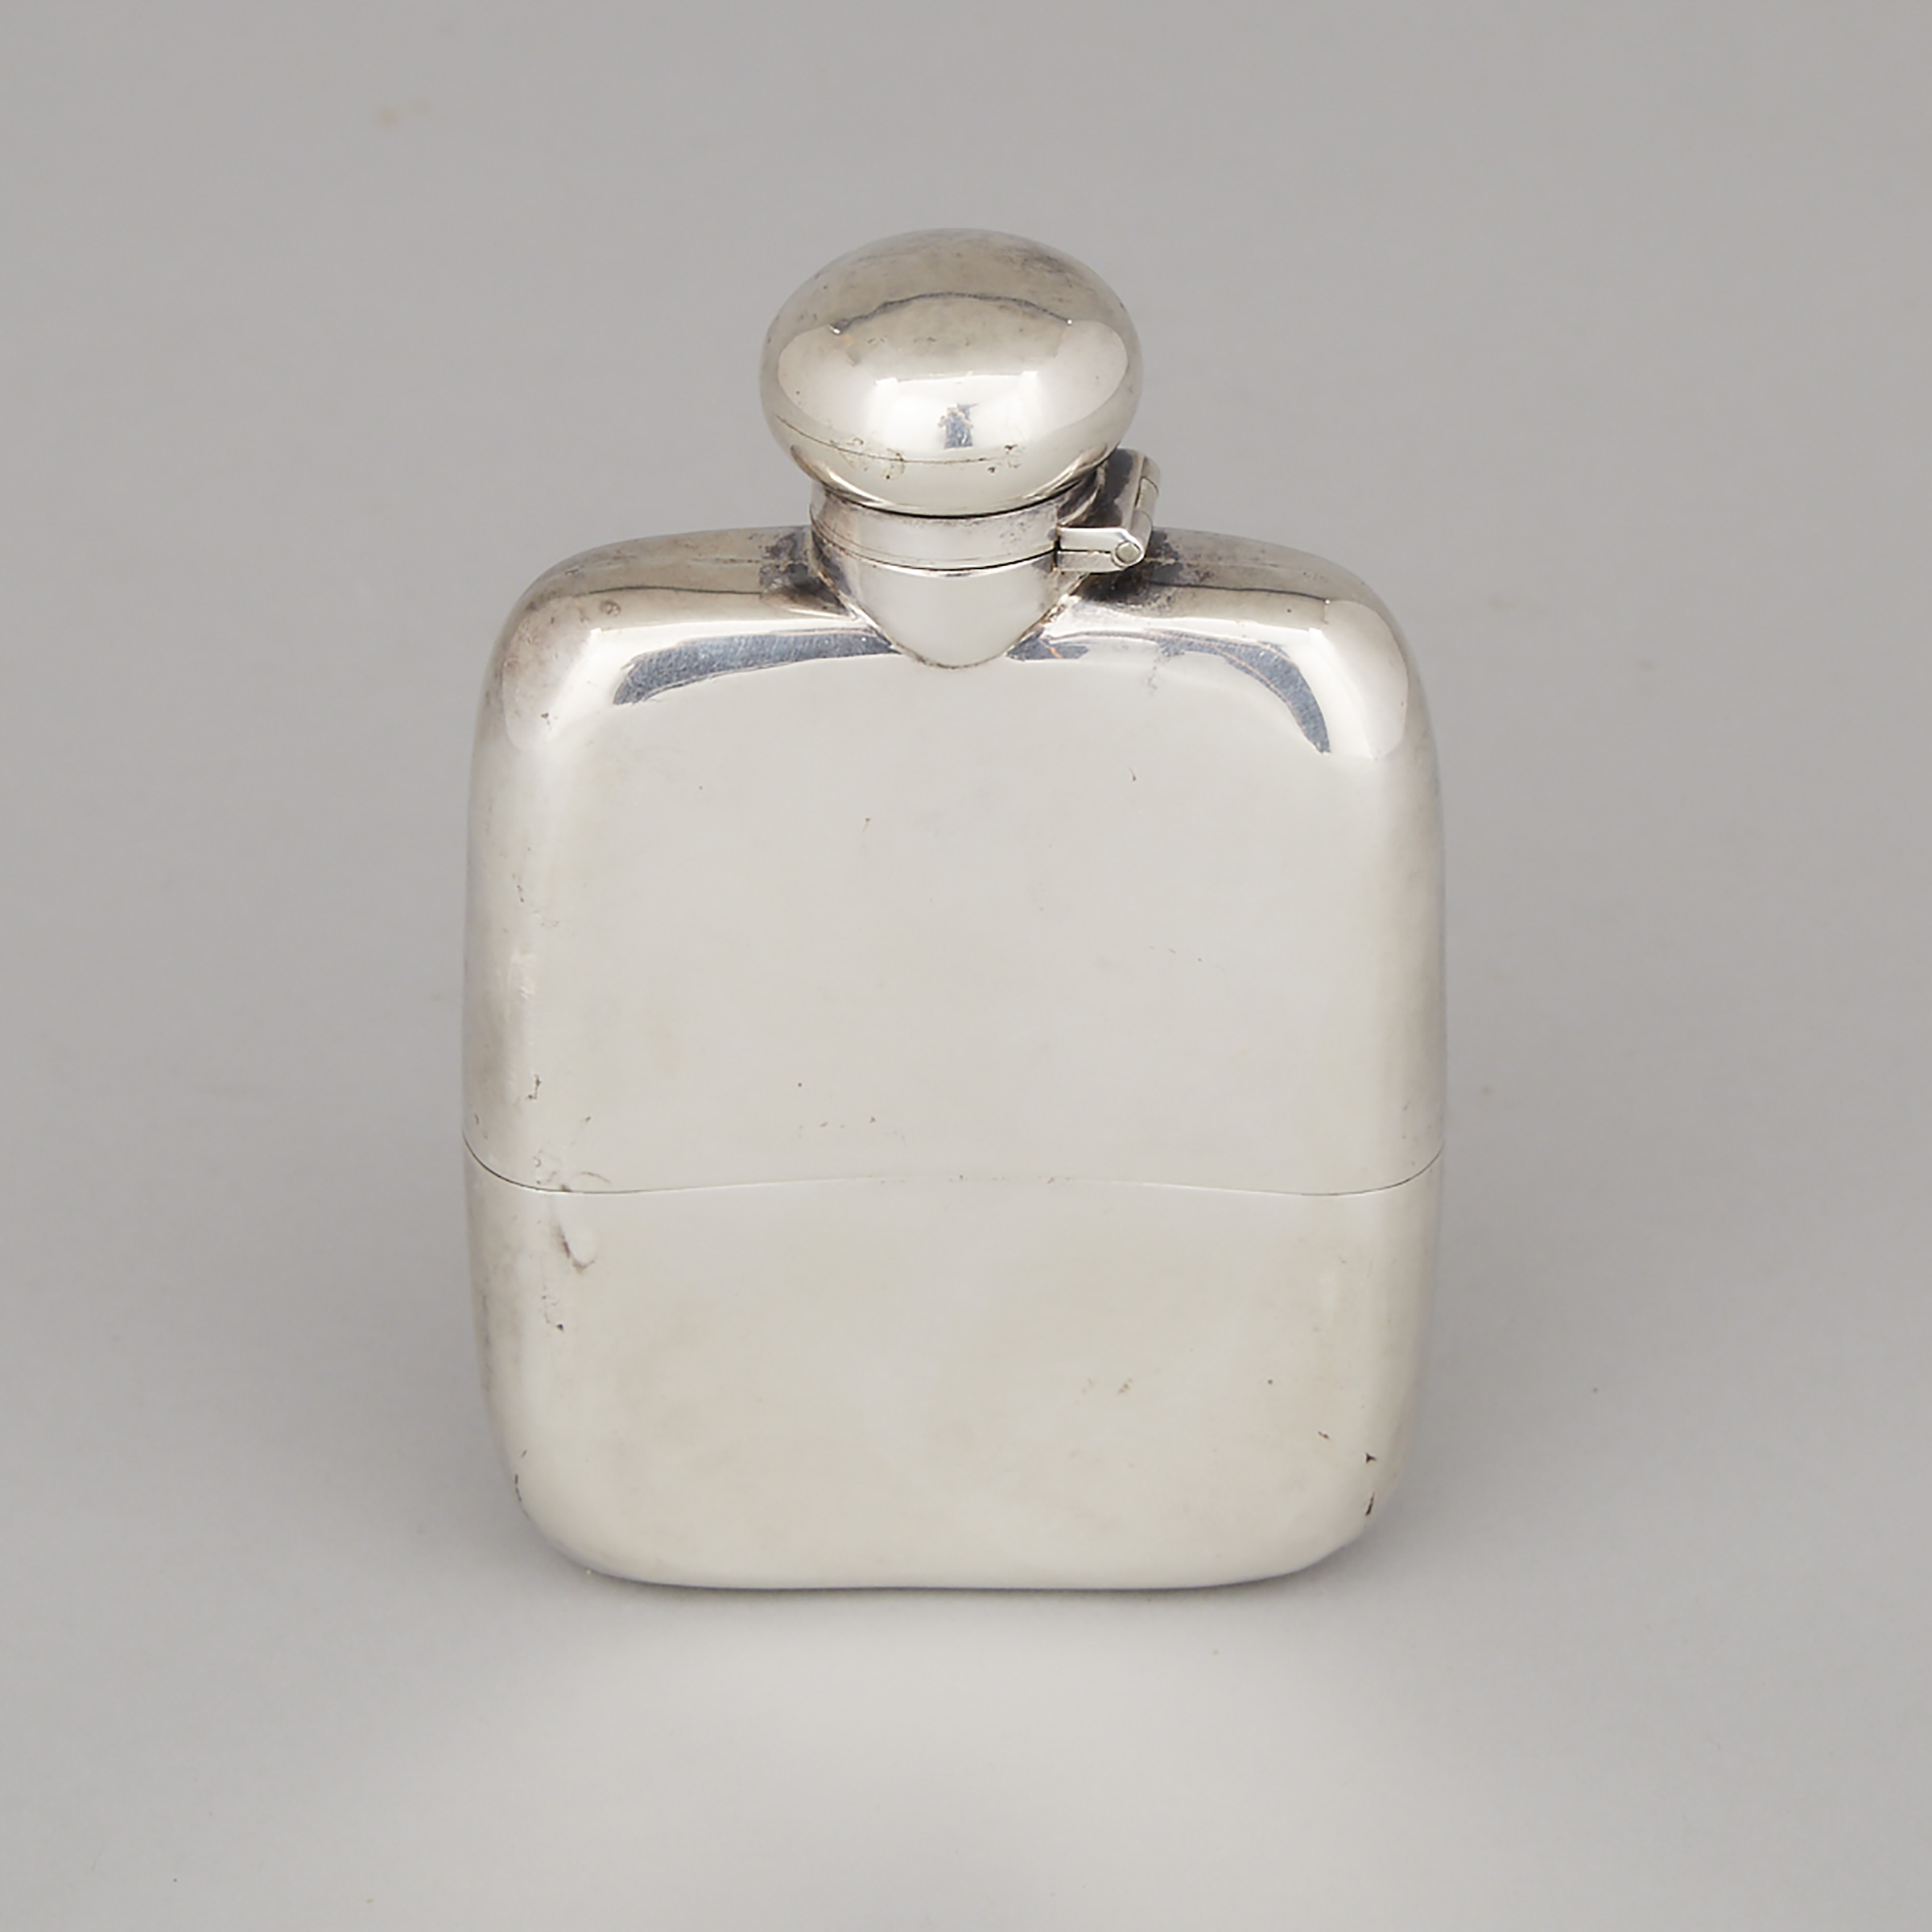 English Silver Spirit Flask, Williams Ltd., Birmingham, 1908